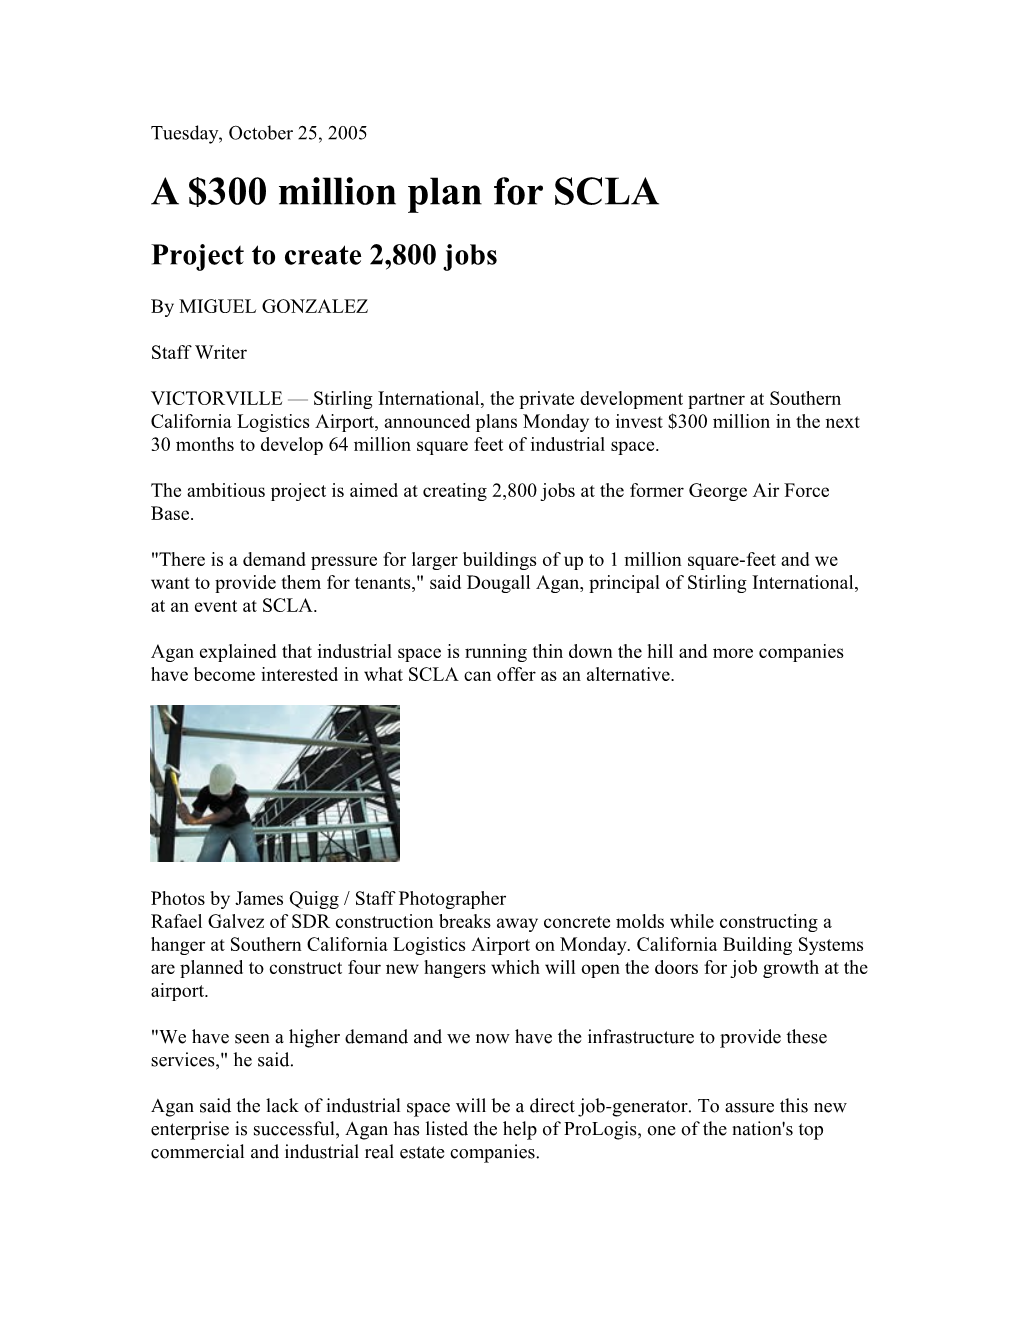 A $300 Million Plan for SCLA